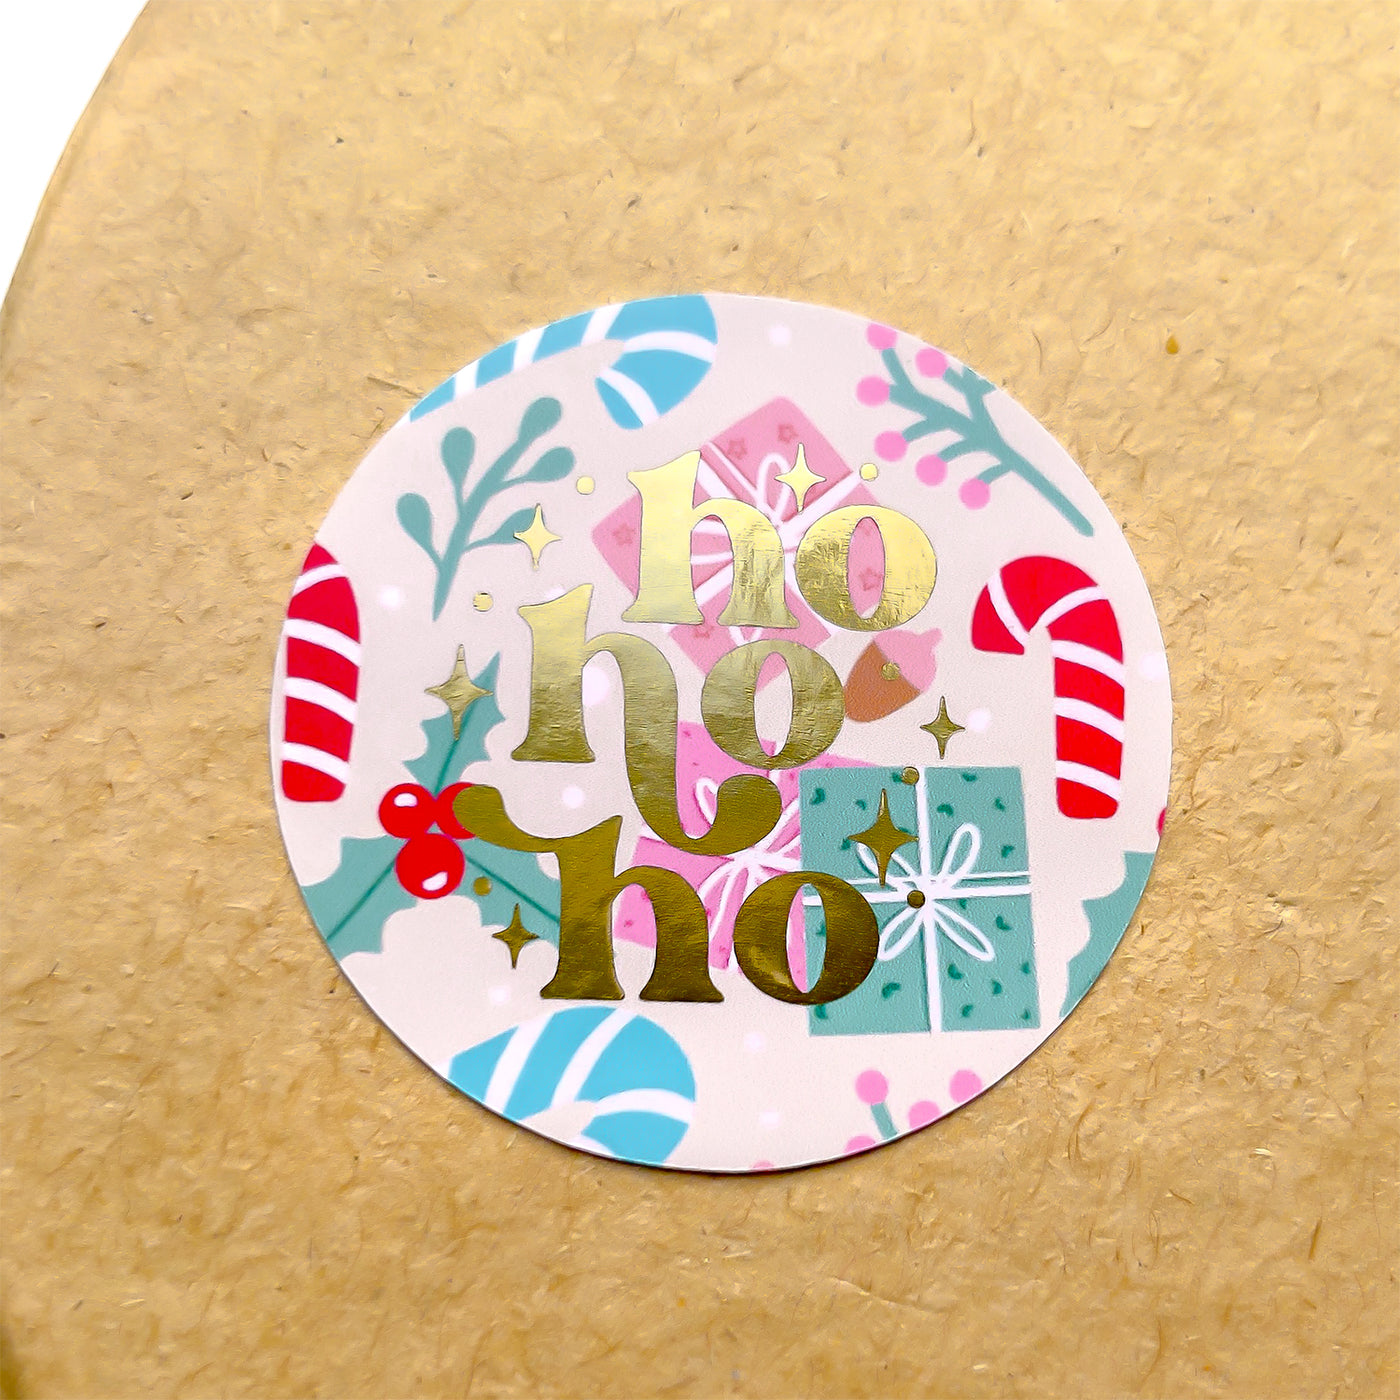 Foiled Retro Ho Ho Ho Festive Background Stickers Round